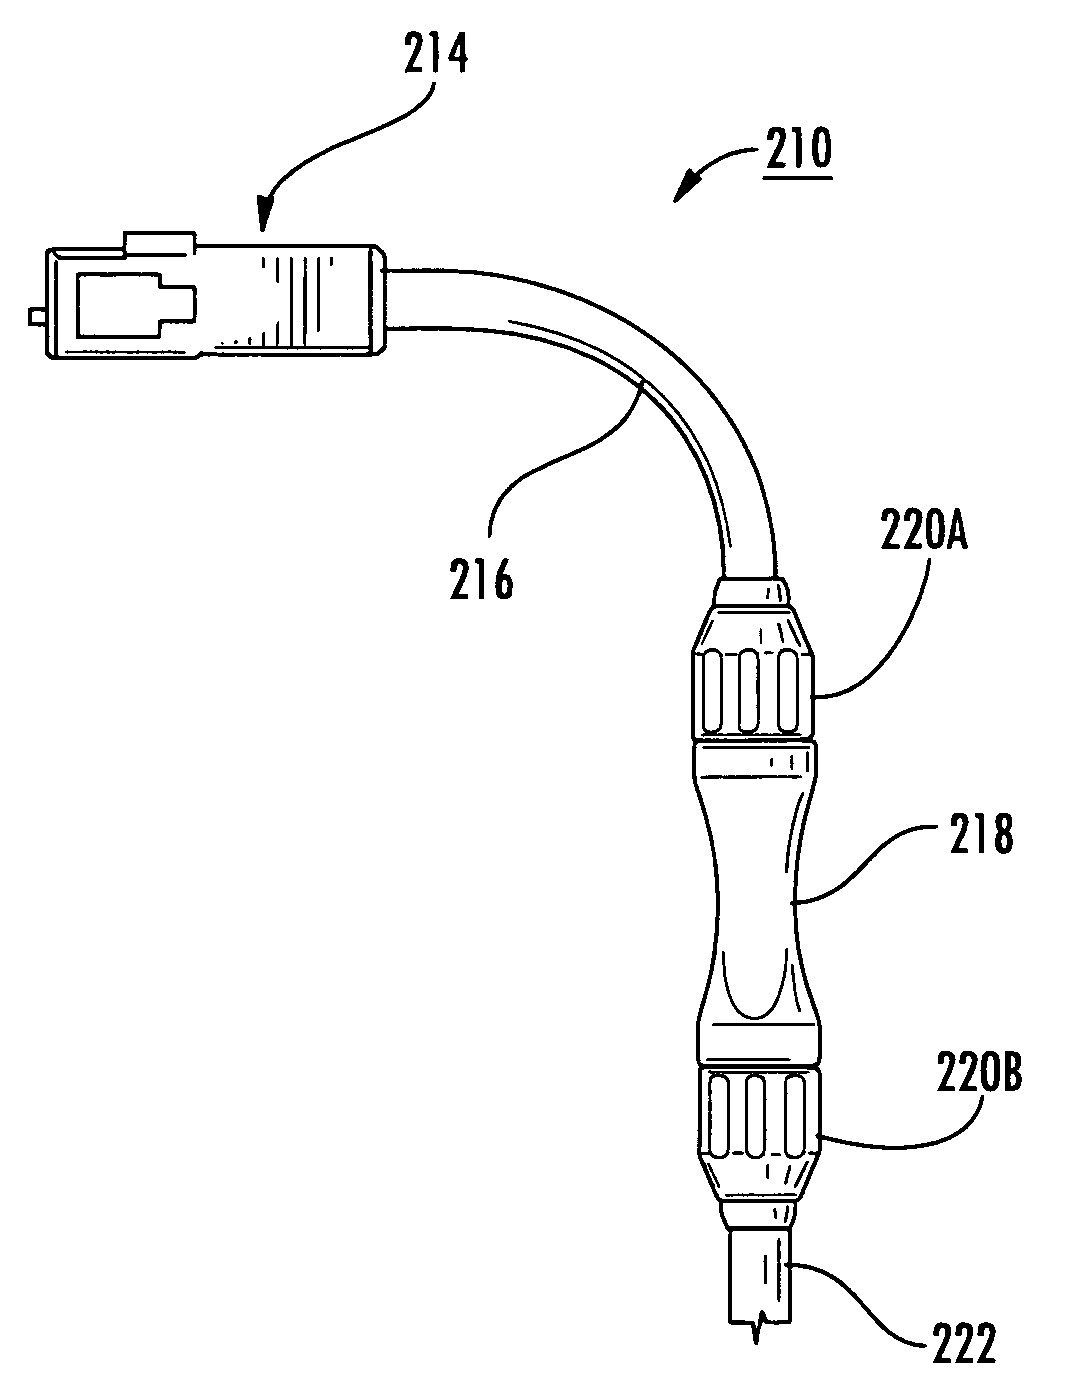 Fusion-splice fiber optic connectors and related tools